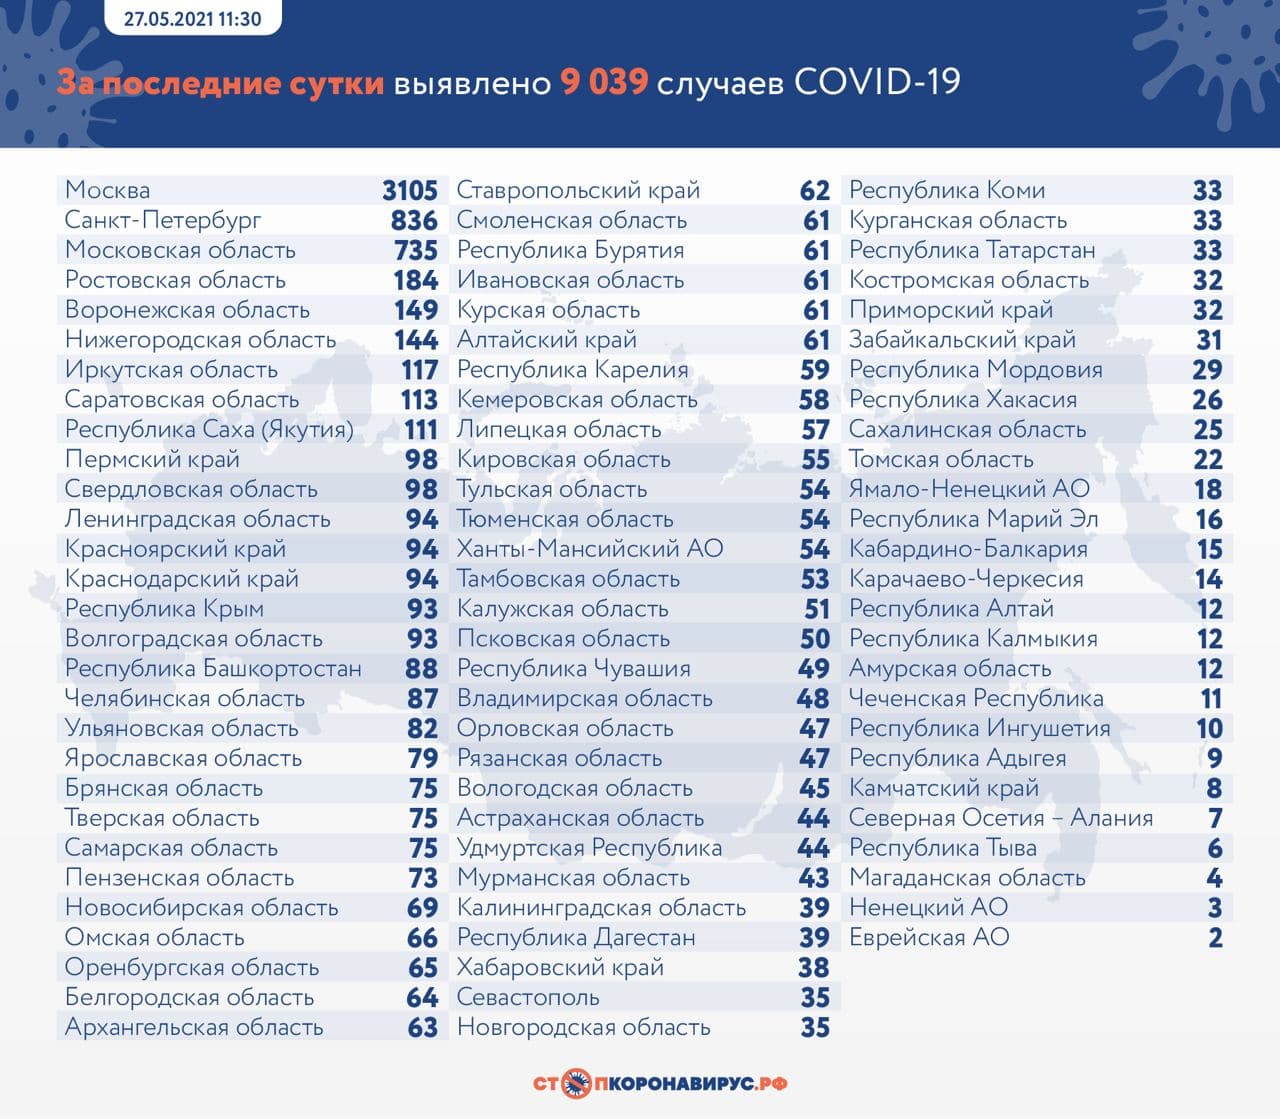 Оперативная статистика по коронавирусу в России на 27 мая